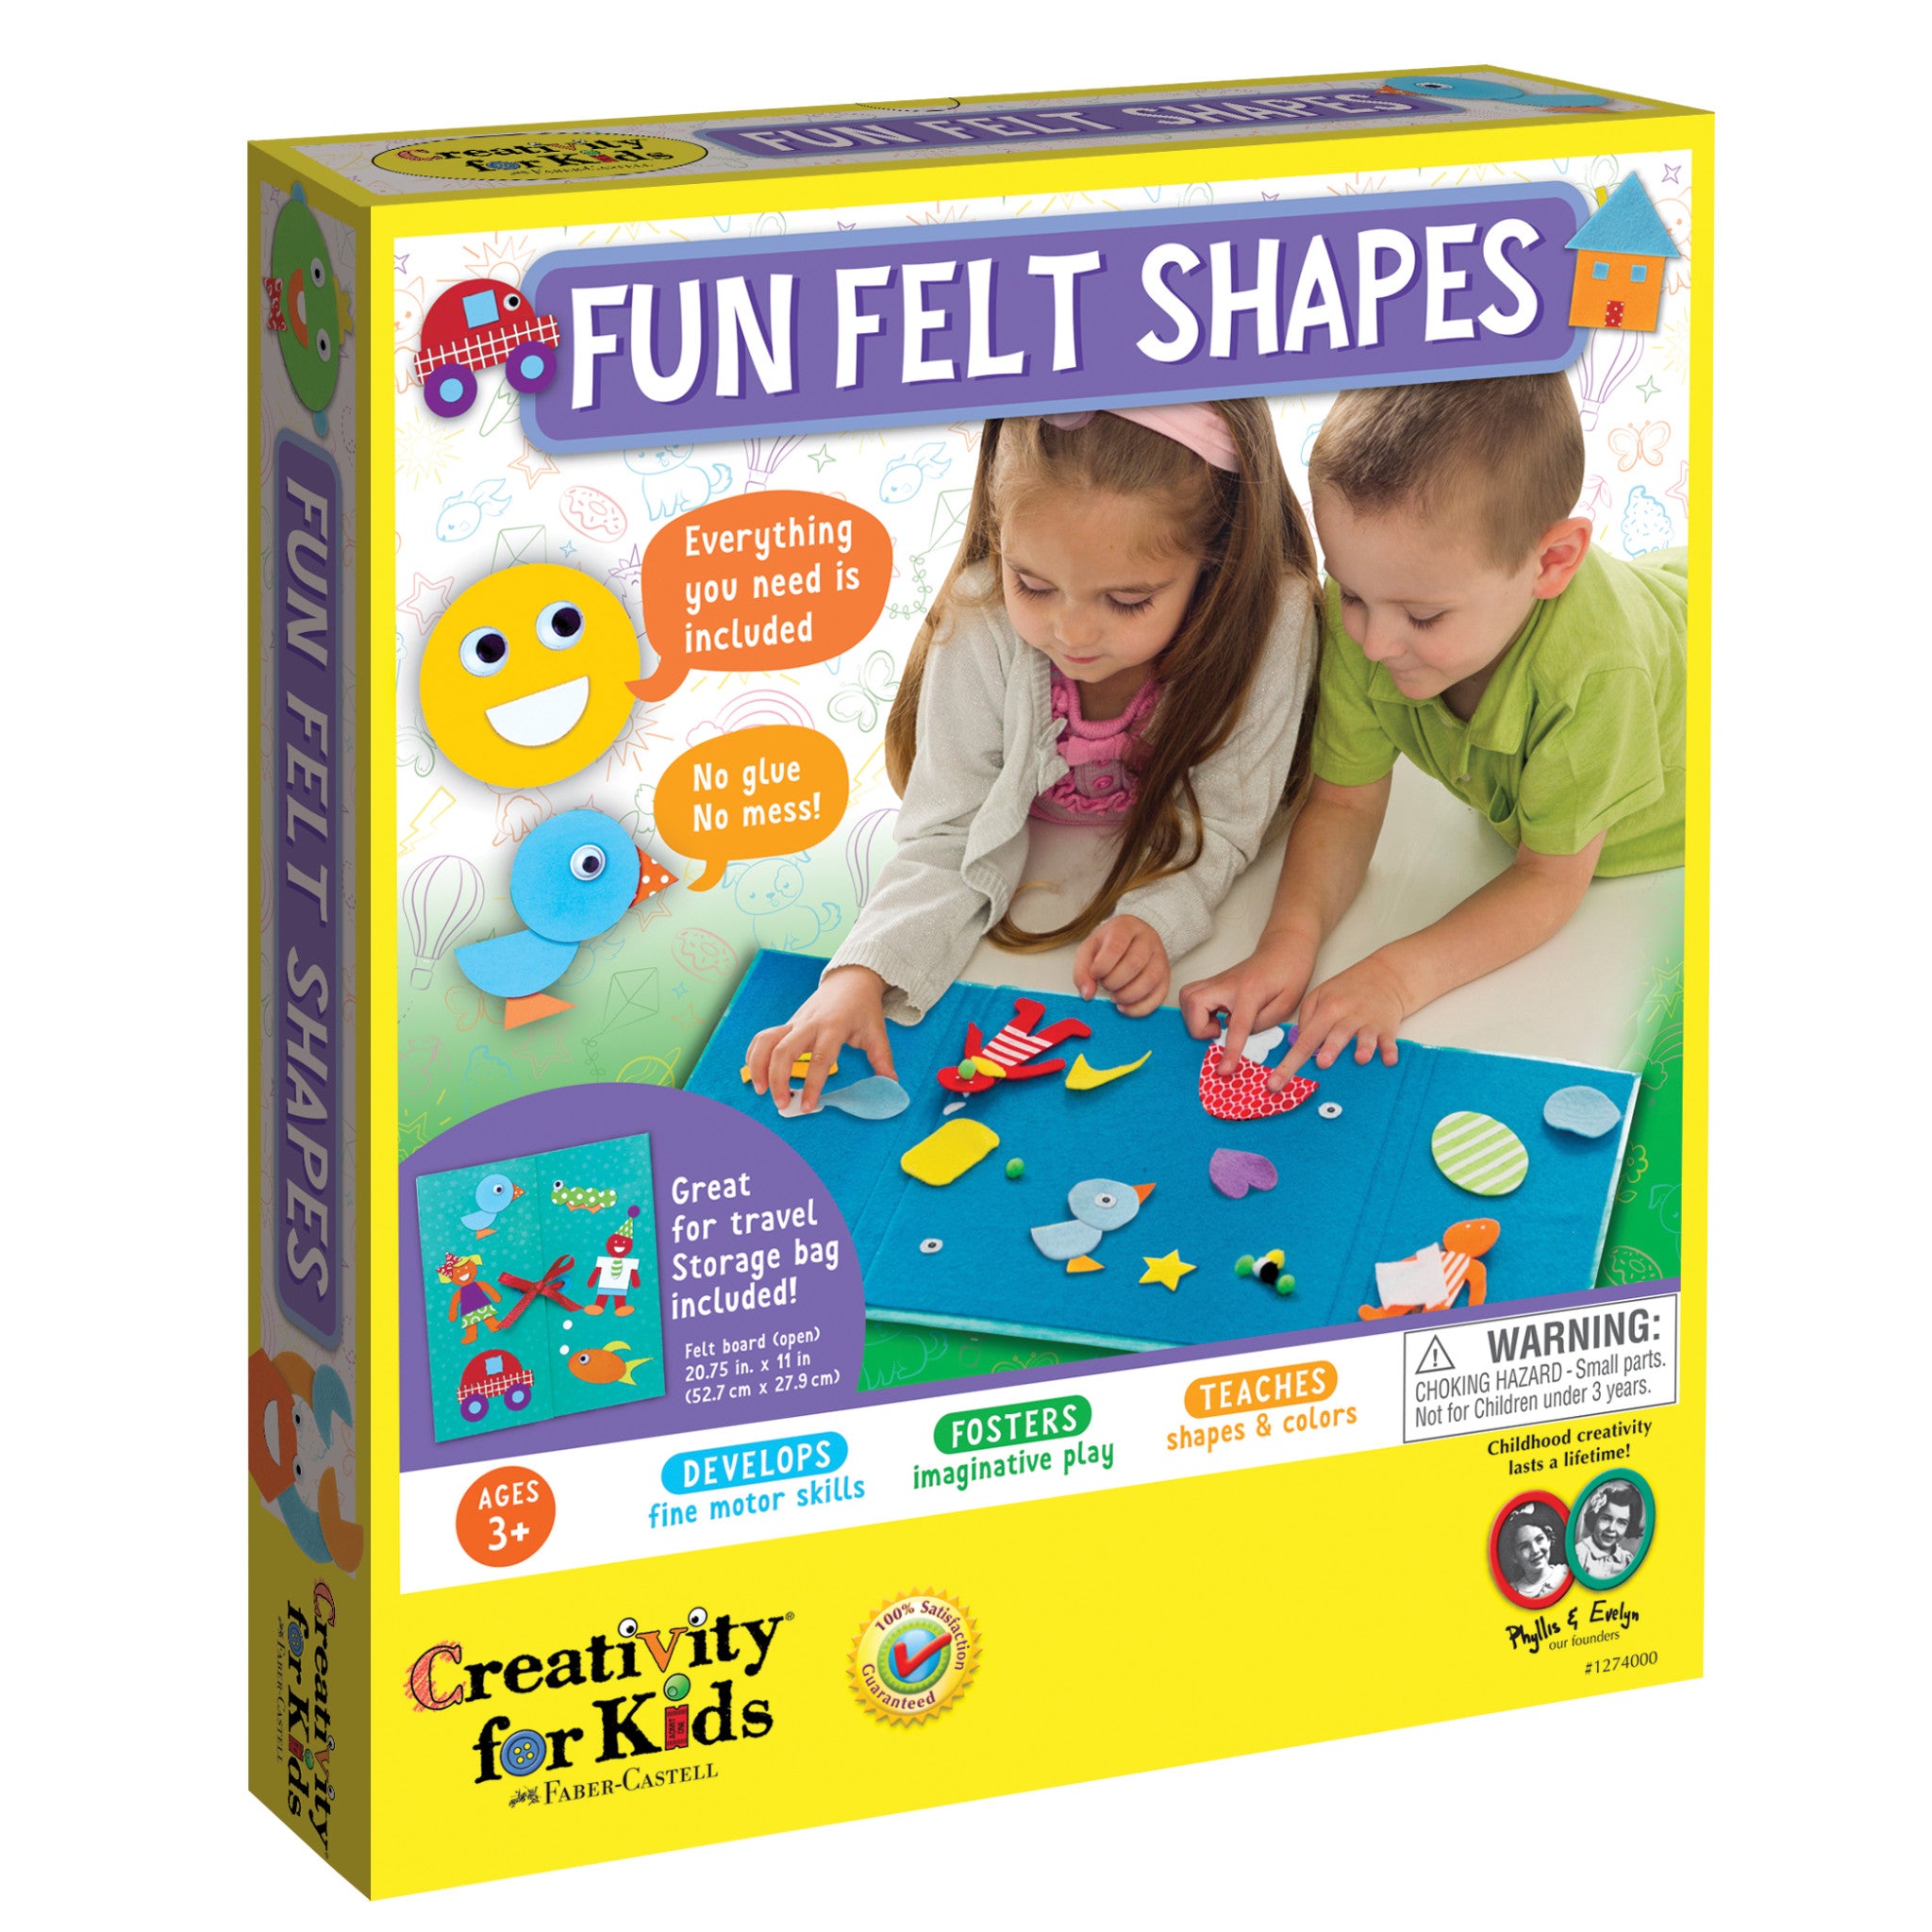 Felt Board Shapes Preschool Graphing Activity » Preschool Toolkit